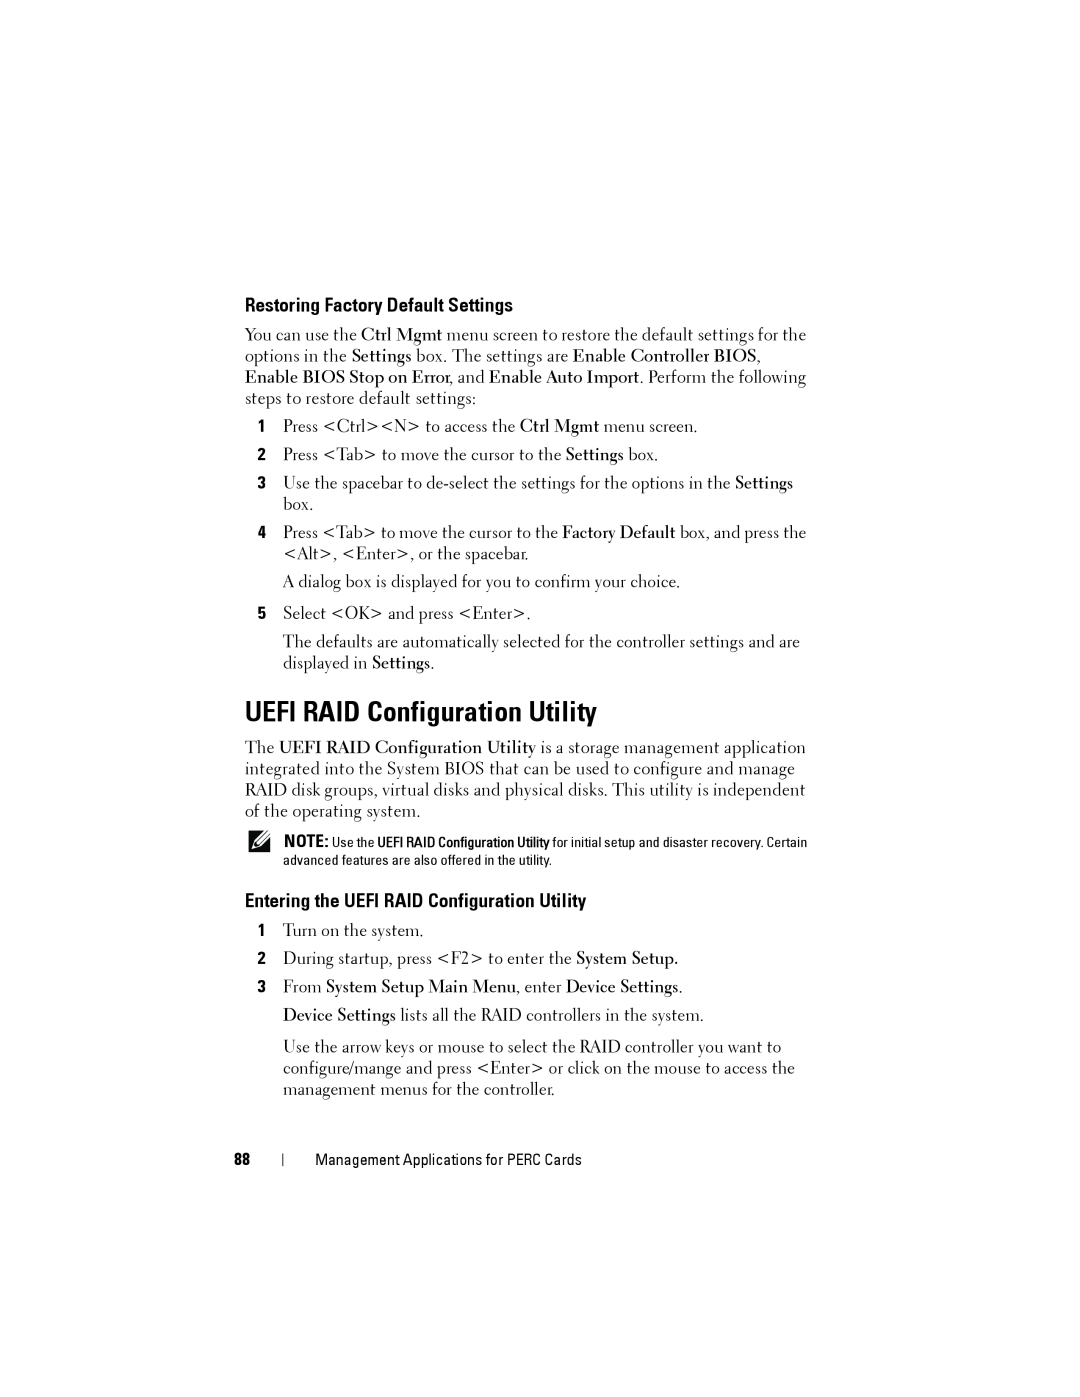 Dell H710P, H310, H810 manual UEFI RAID Configuration Utility, Restoring Factory Default Settings 